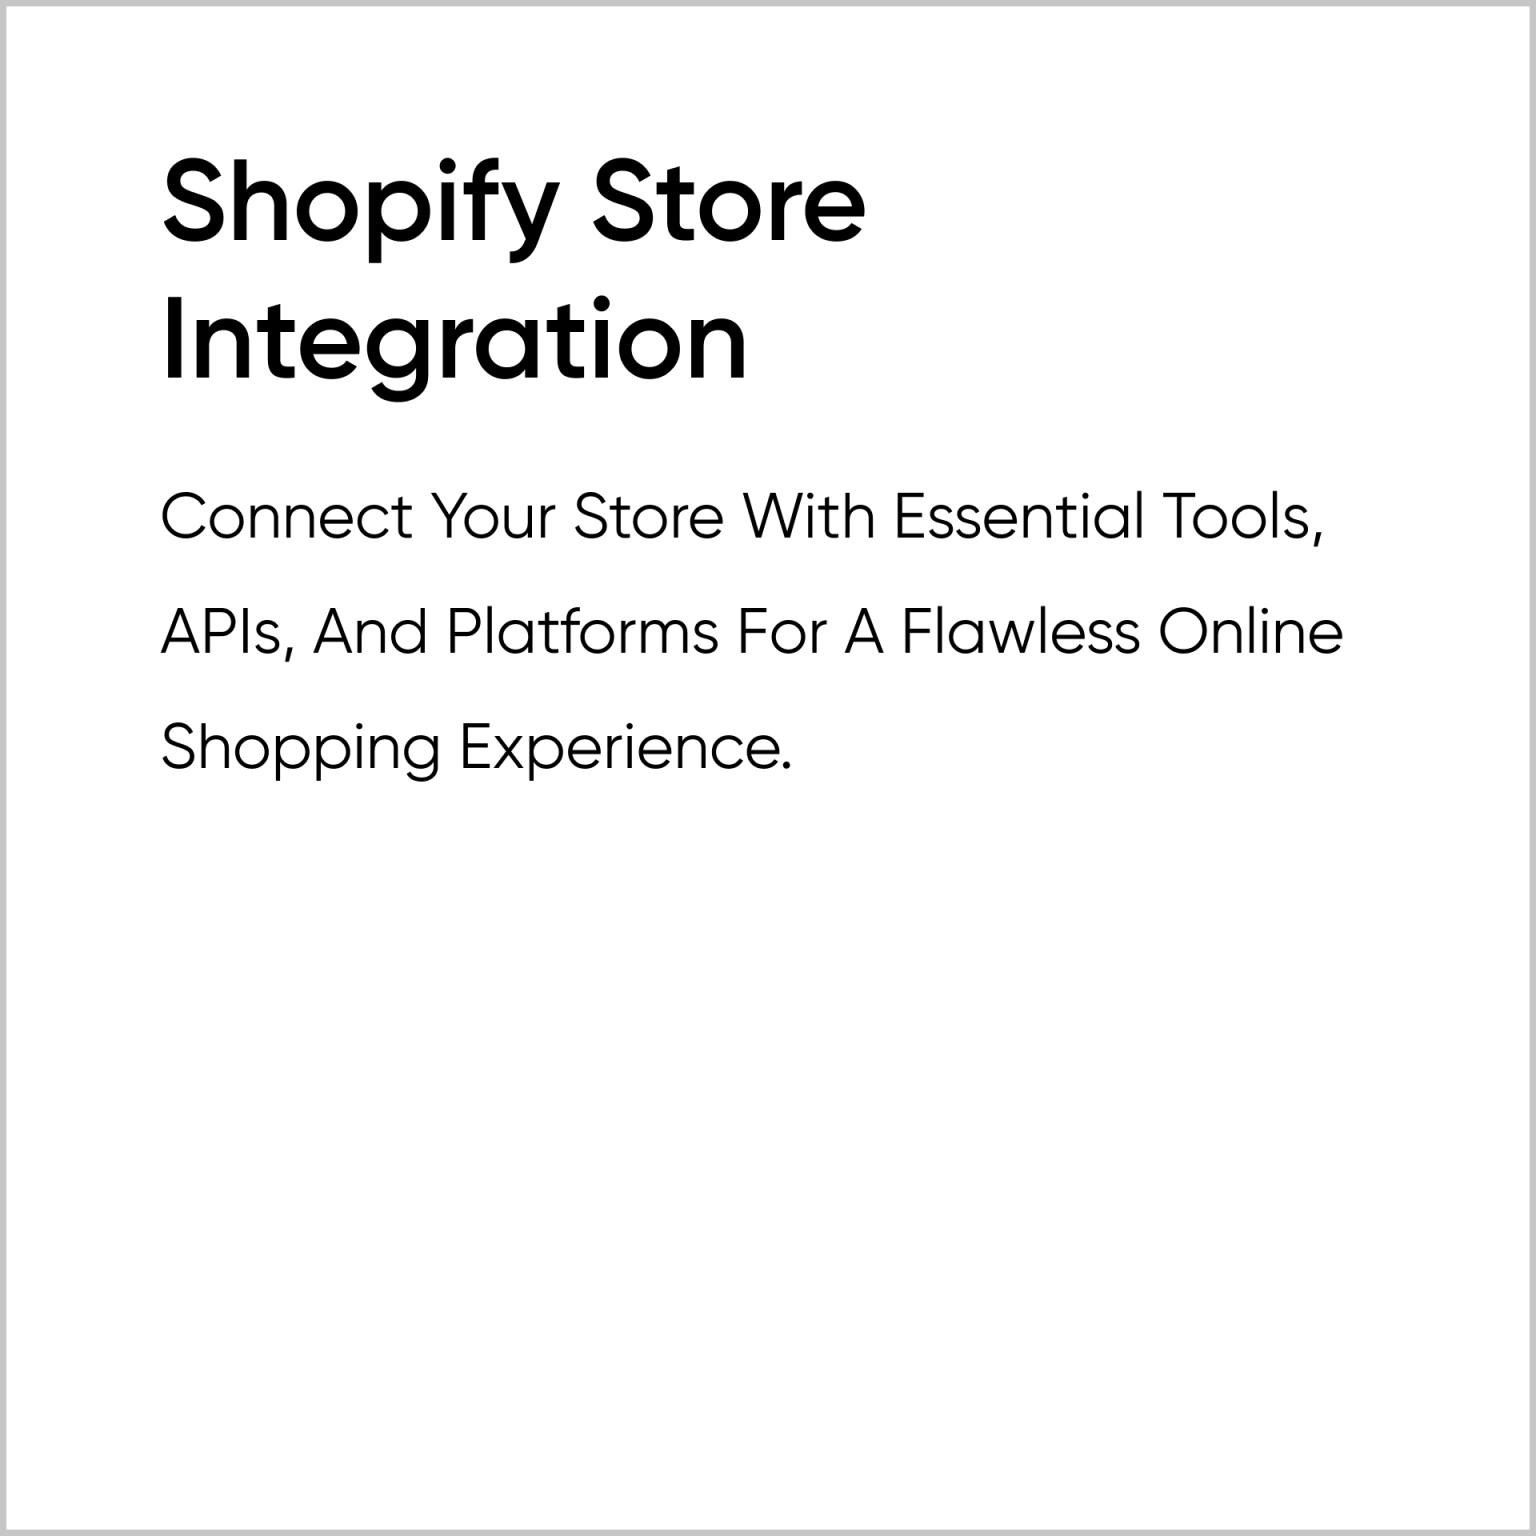 Shopify Store Integration